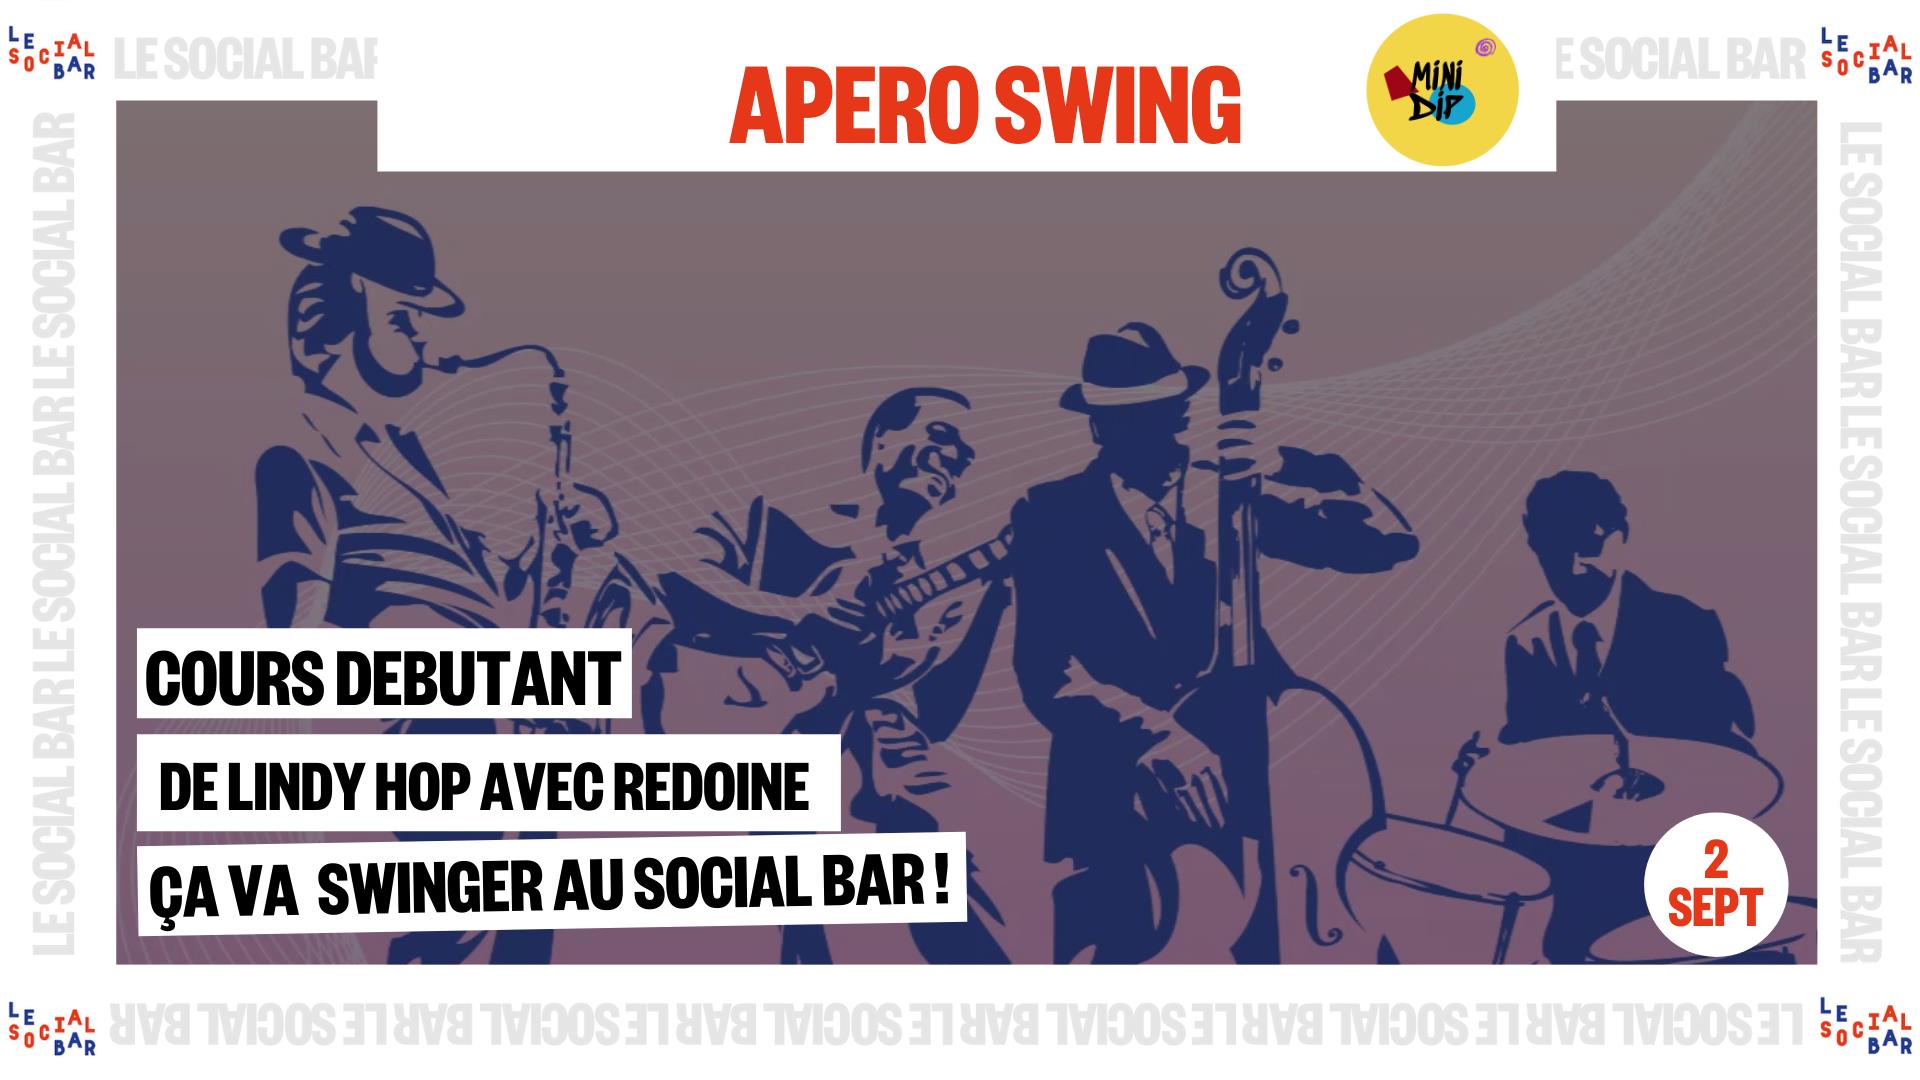 Apero Swing